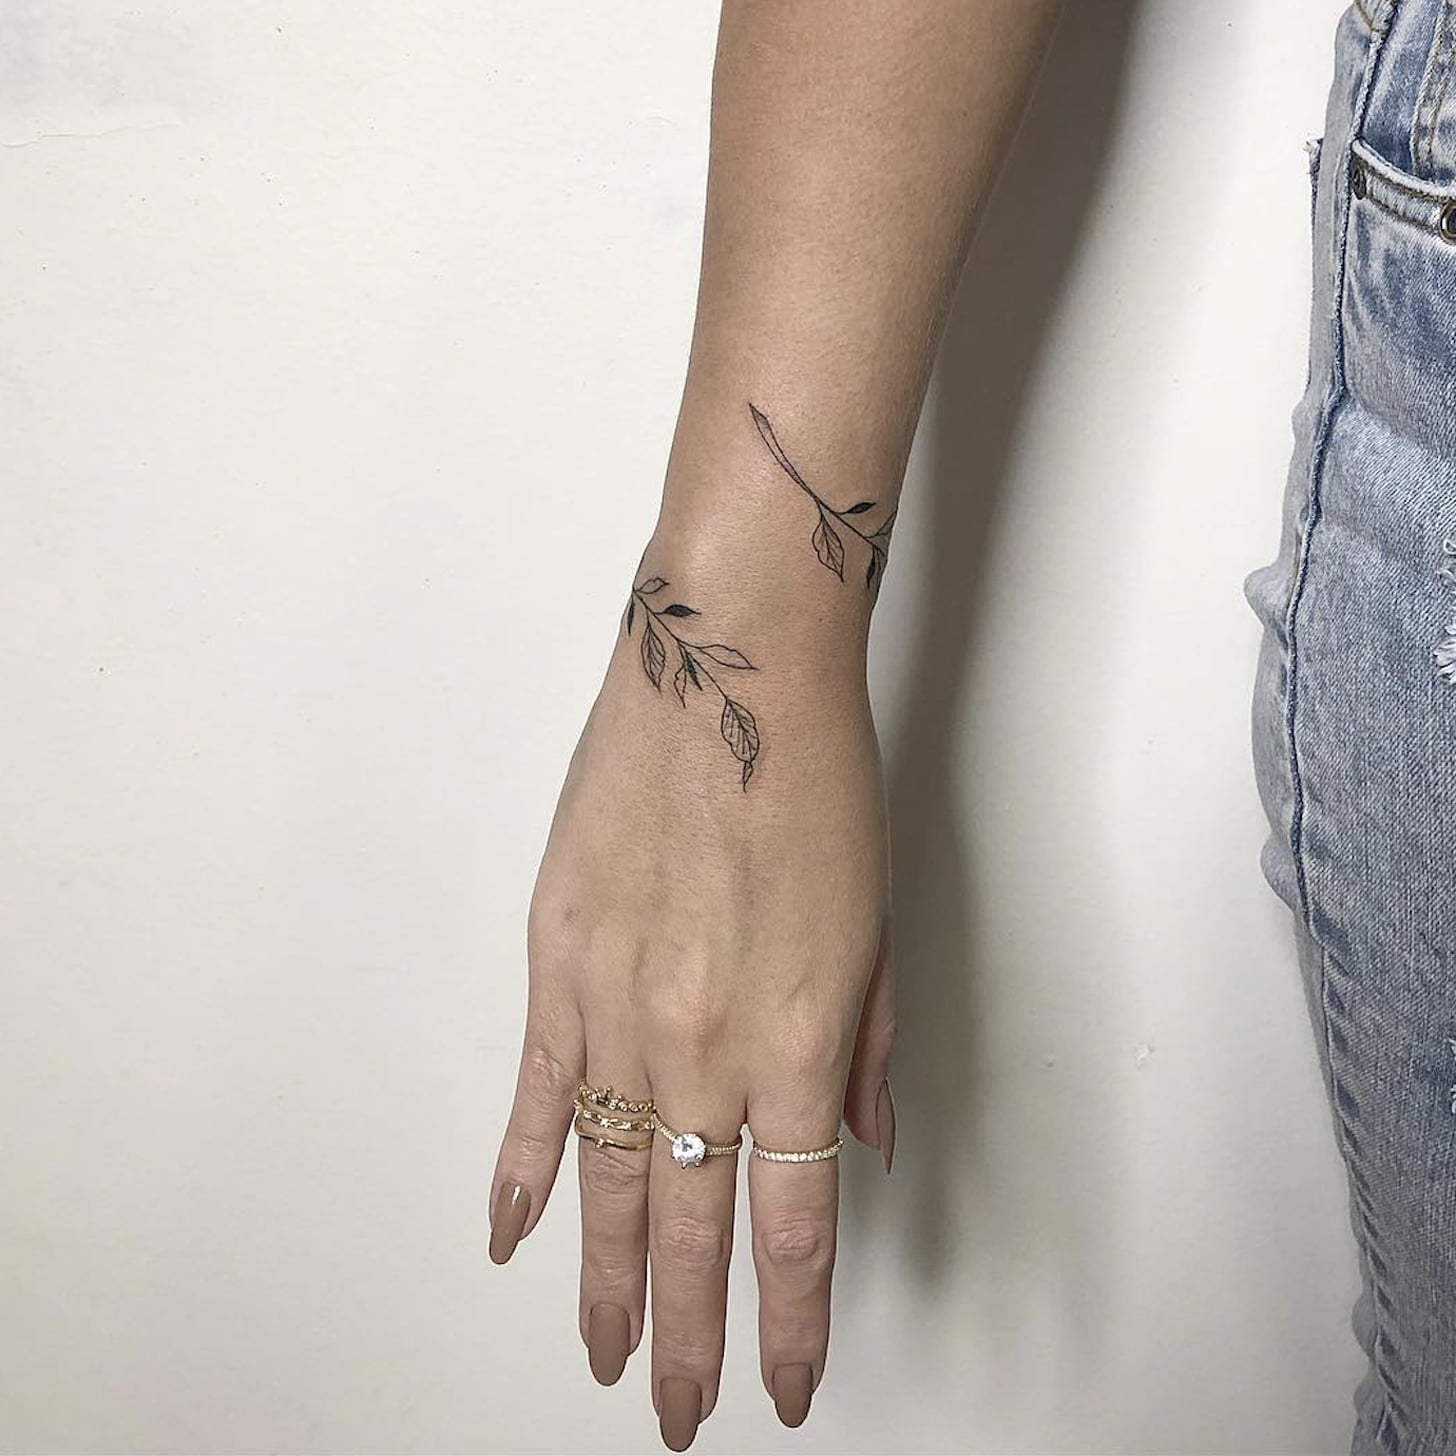 Flower Wrist Bracelet Tattoo... #tattoo #wristtattoo #bracelettattoo  #bandtattoo #flowertattoo #wristband #tattoos #tattoostyle #tattoolife  #tattoolover... | By Tattoology Studio | Facebook